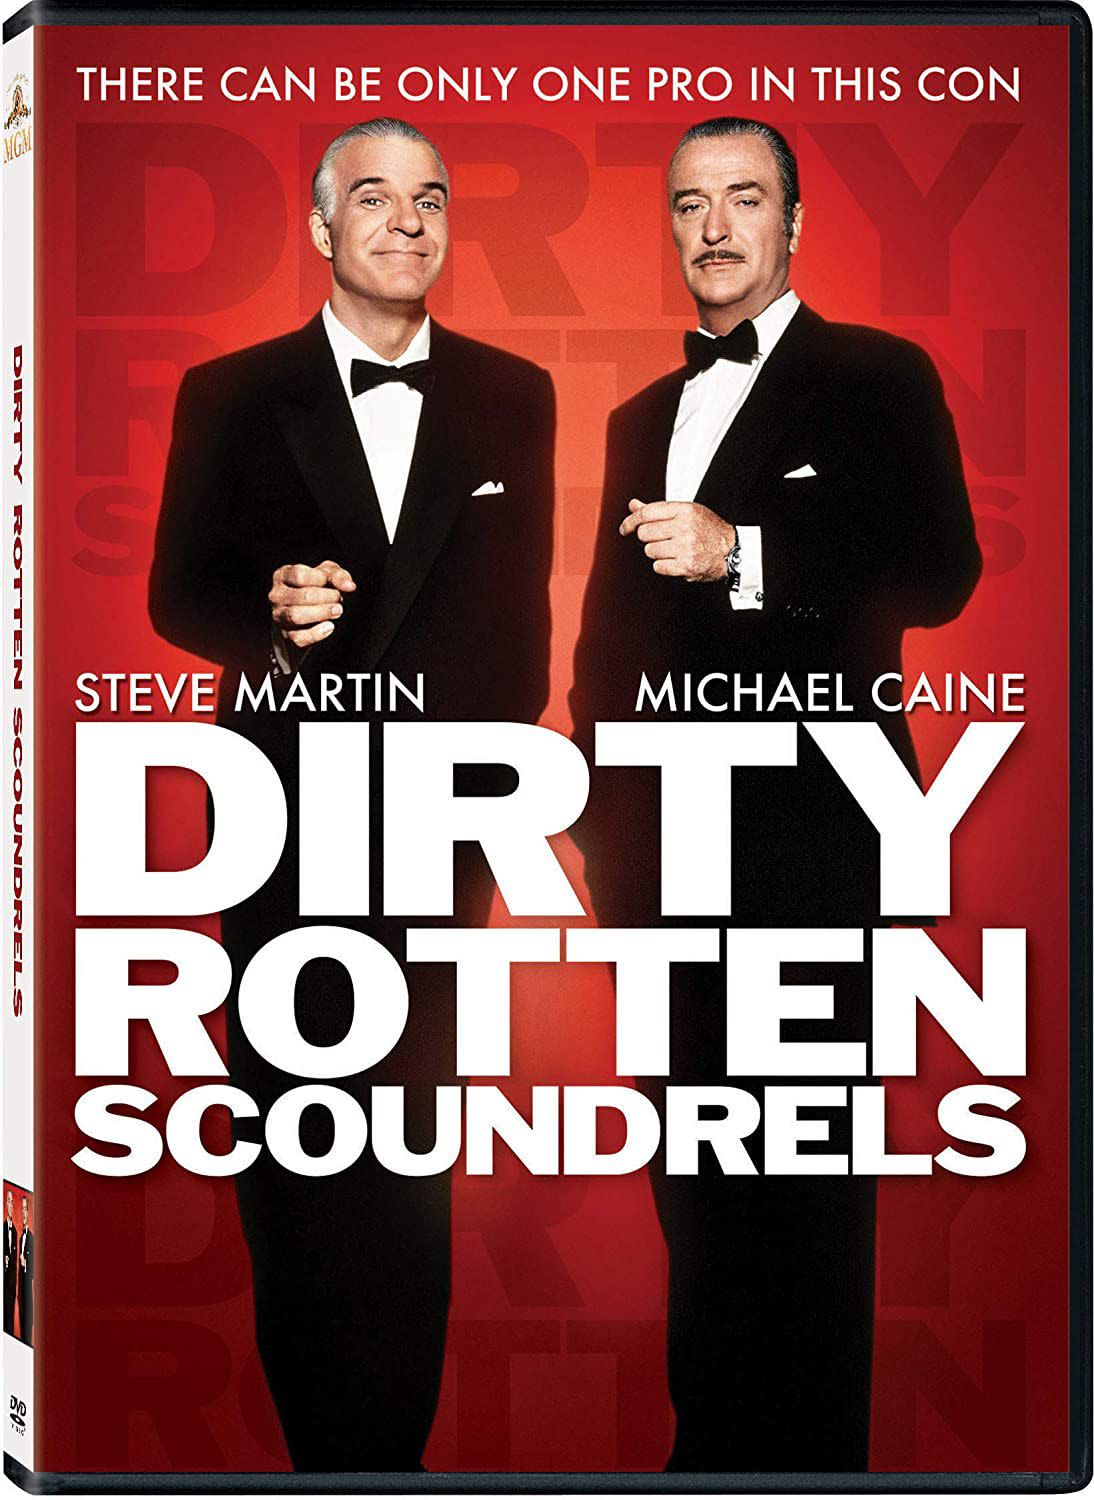 ‘Dirty Rotten Scoundrels